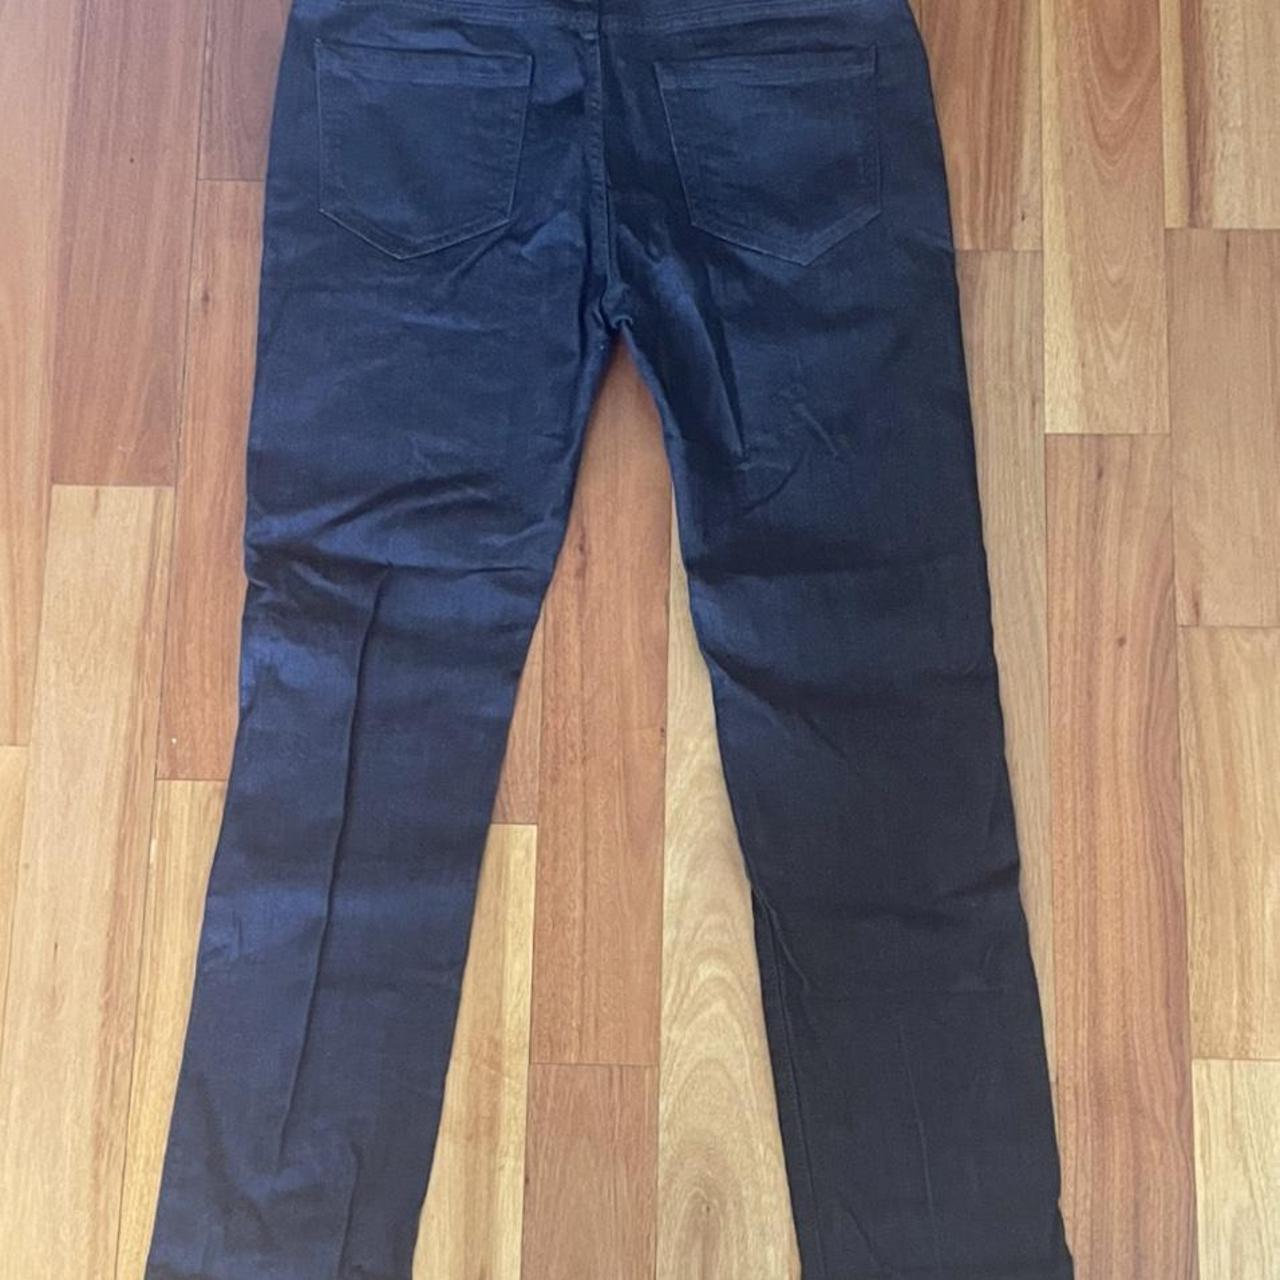 Product Image 2 - Celio Slim Jeans

34x32

Dark blue wash